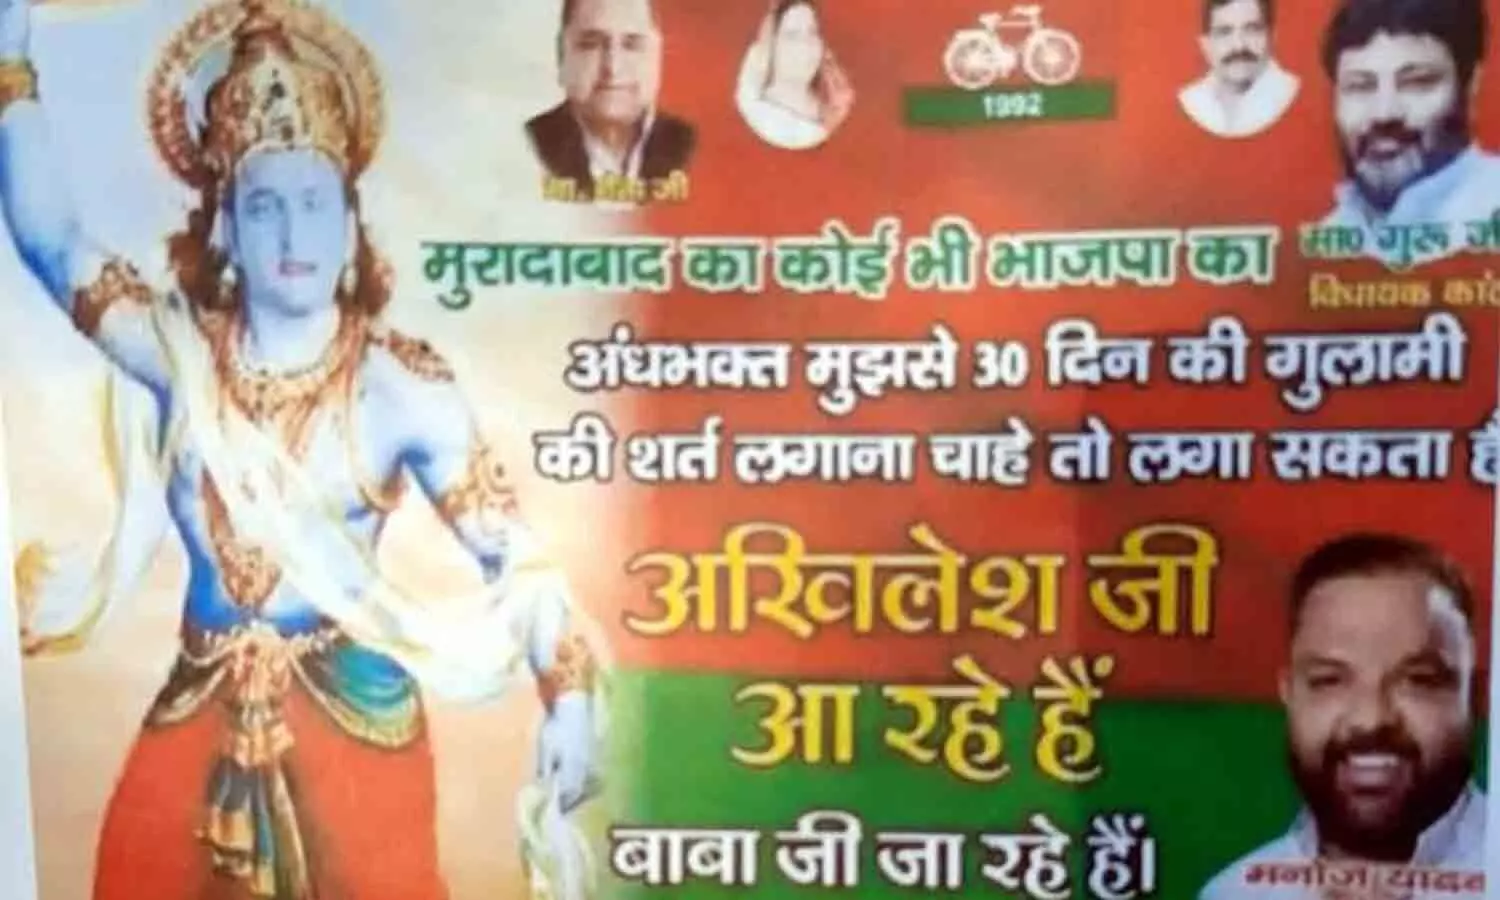 Moradabad News: Akhilesh in Shri Krishna avatar, Hindu leader objected to SP leaders Facebook account